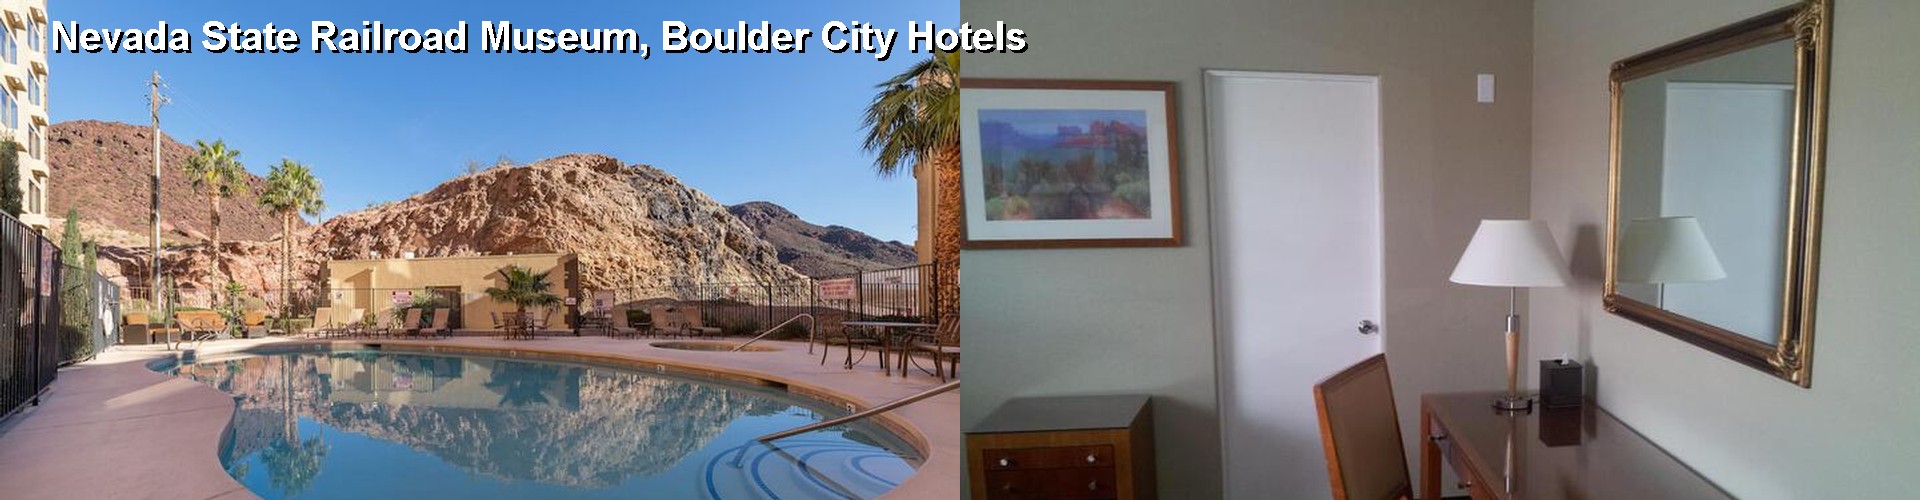 3 Best Hotels near Nevada State Railroad Museum, Boulder City